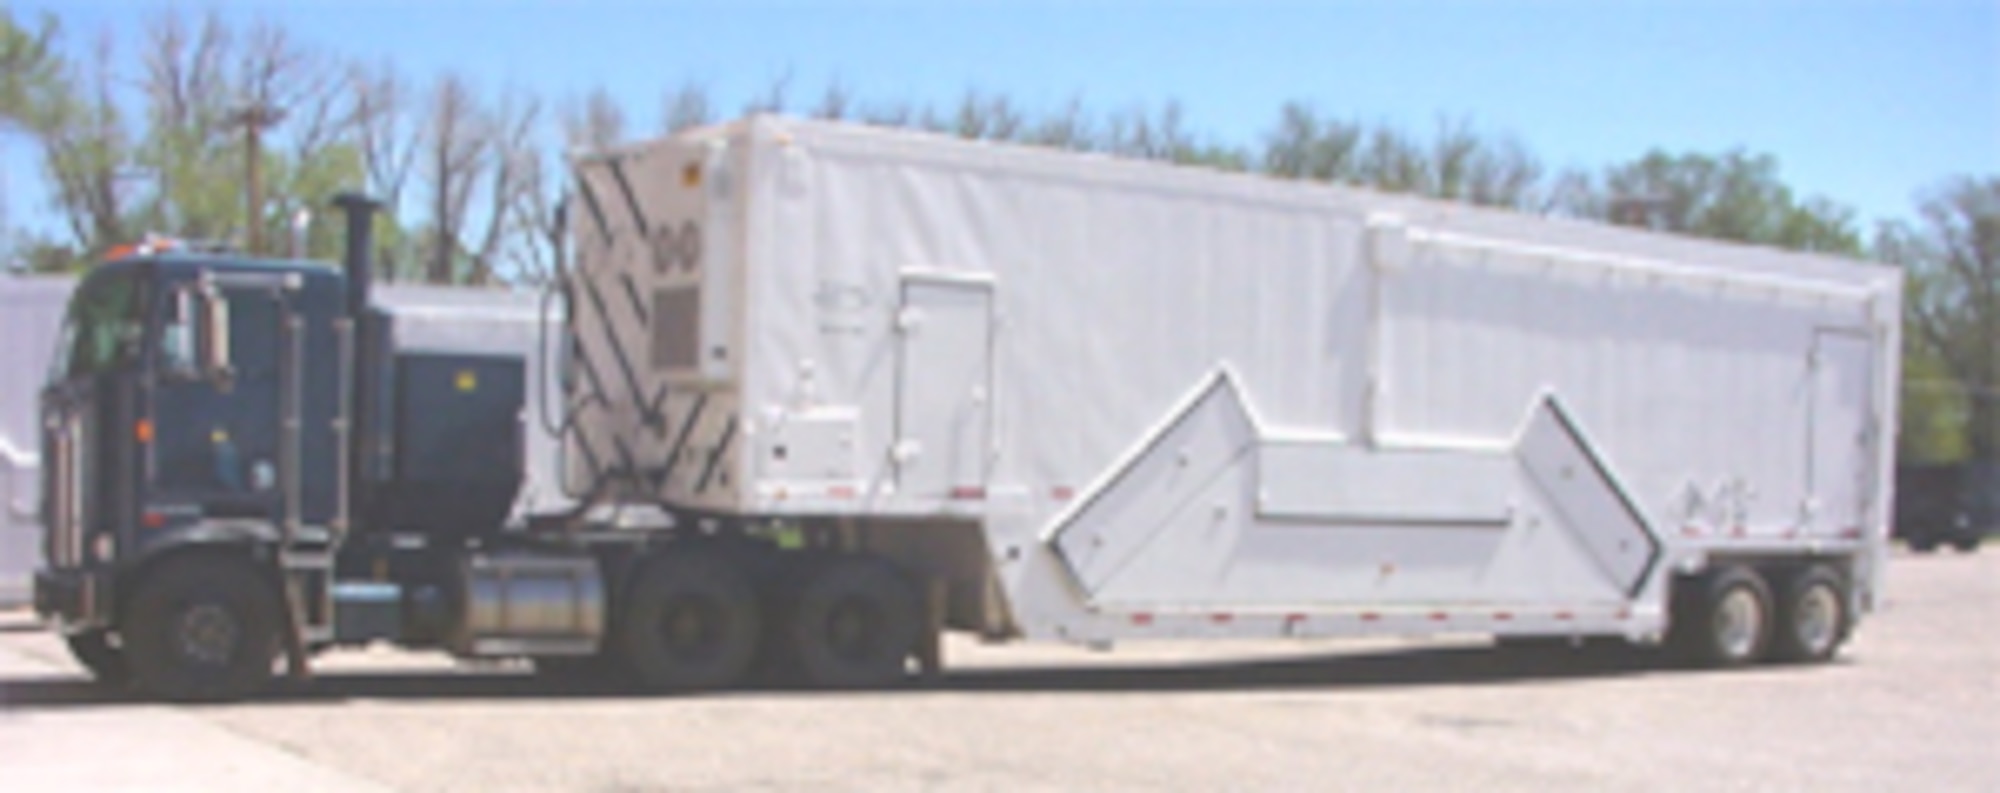 Payload transporter for Minuteman III ICBM